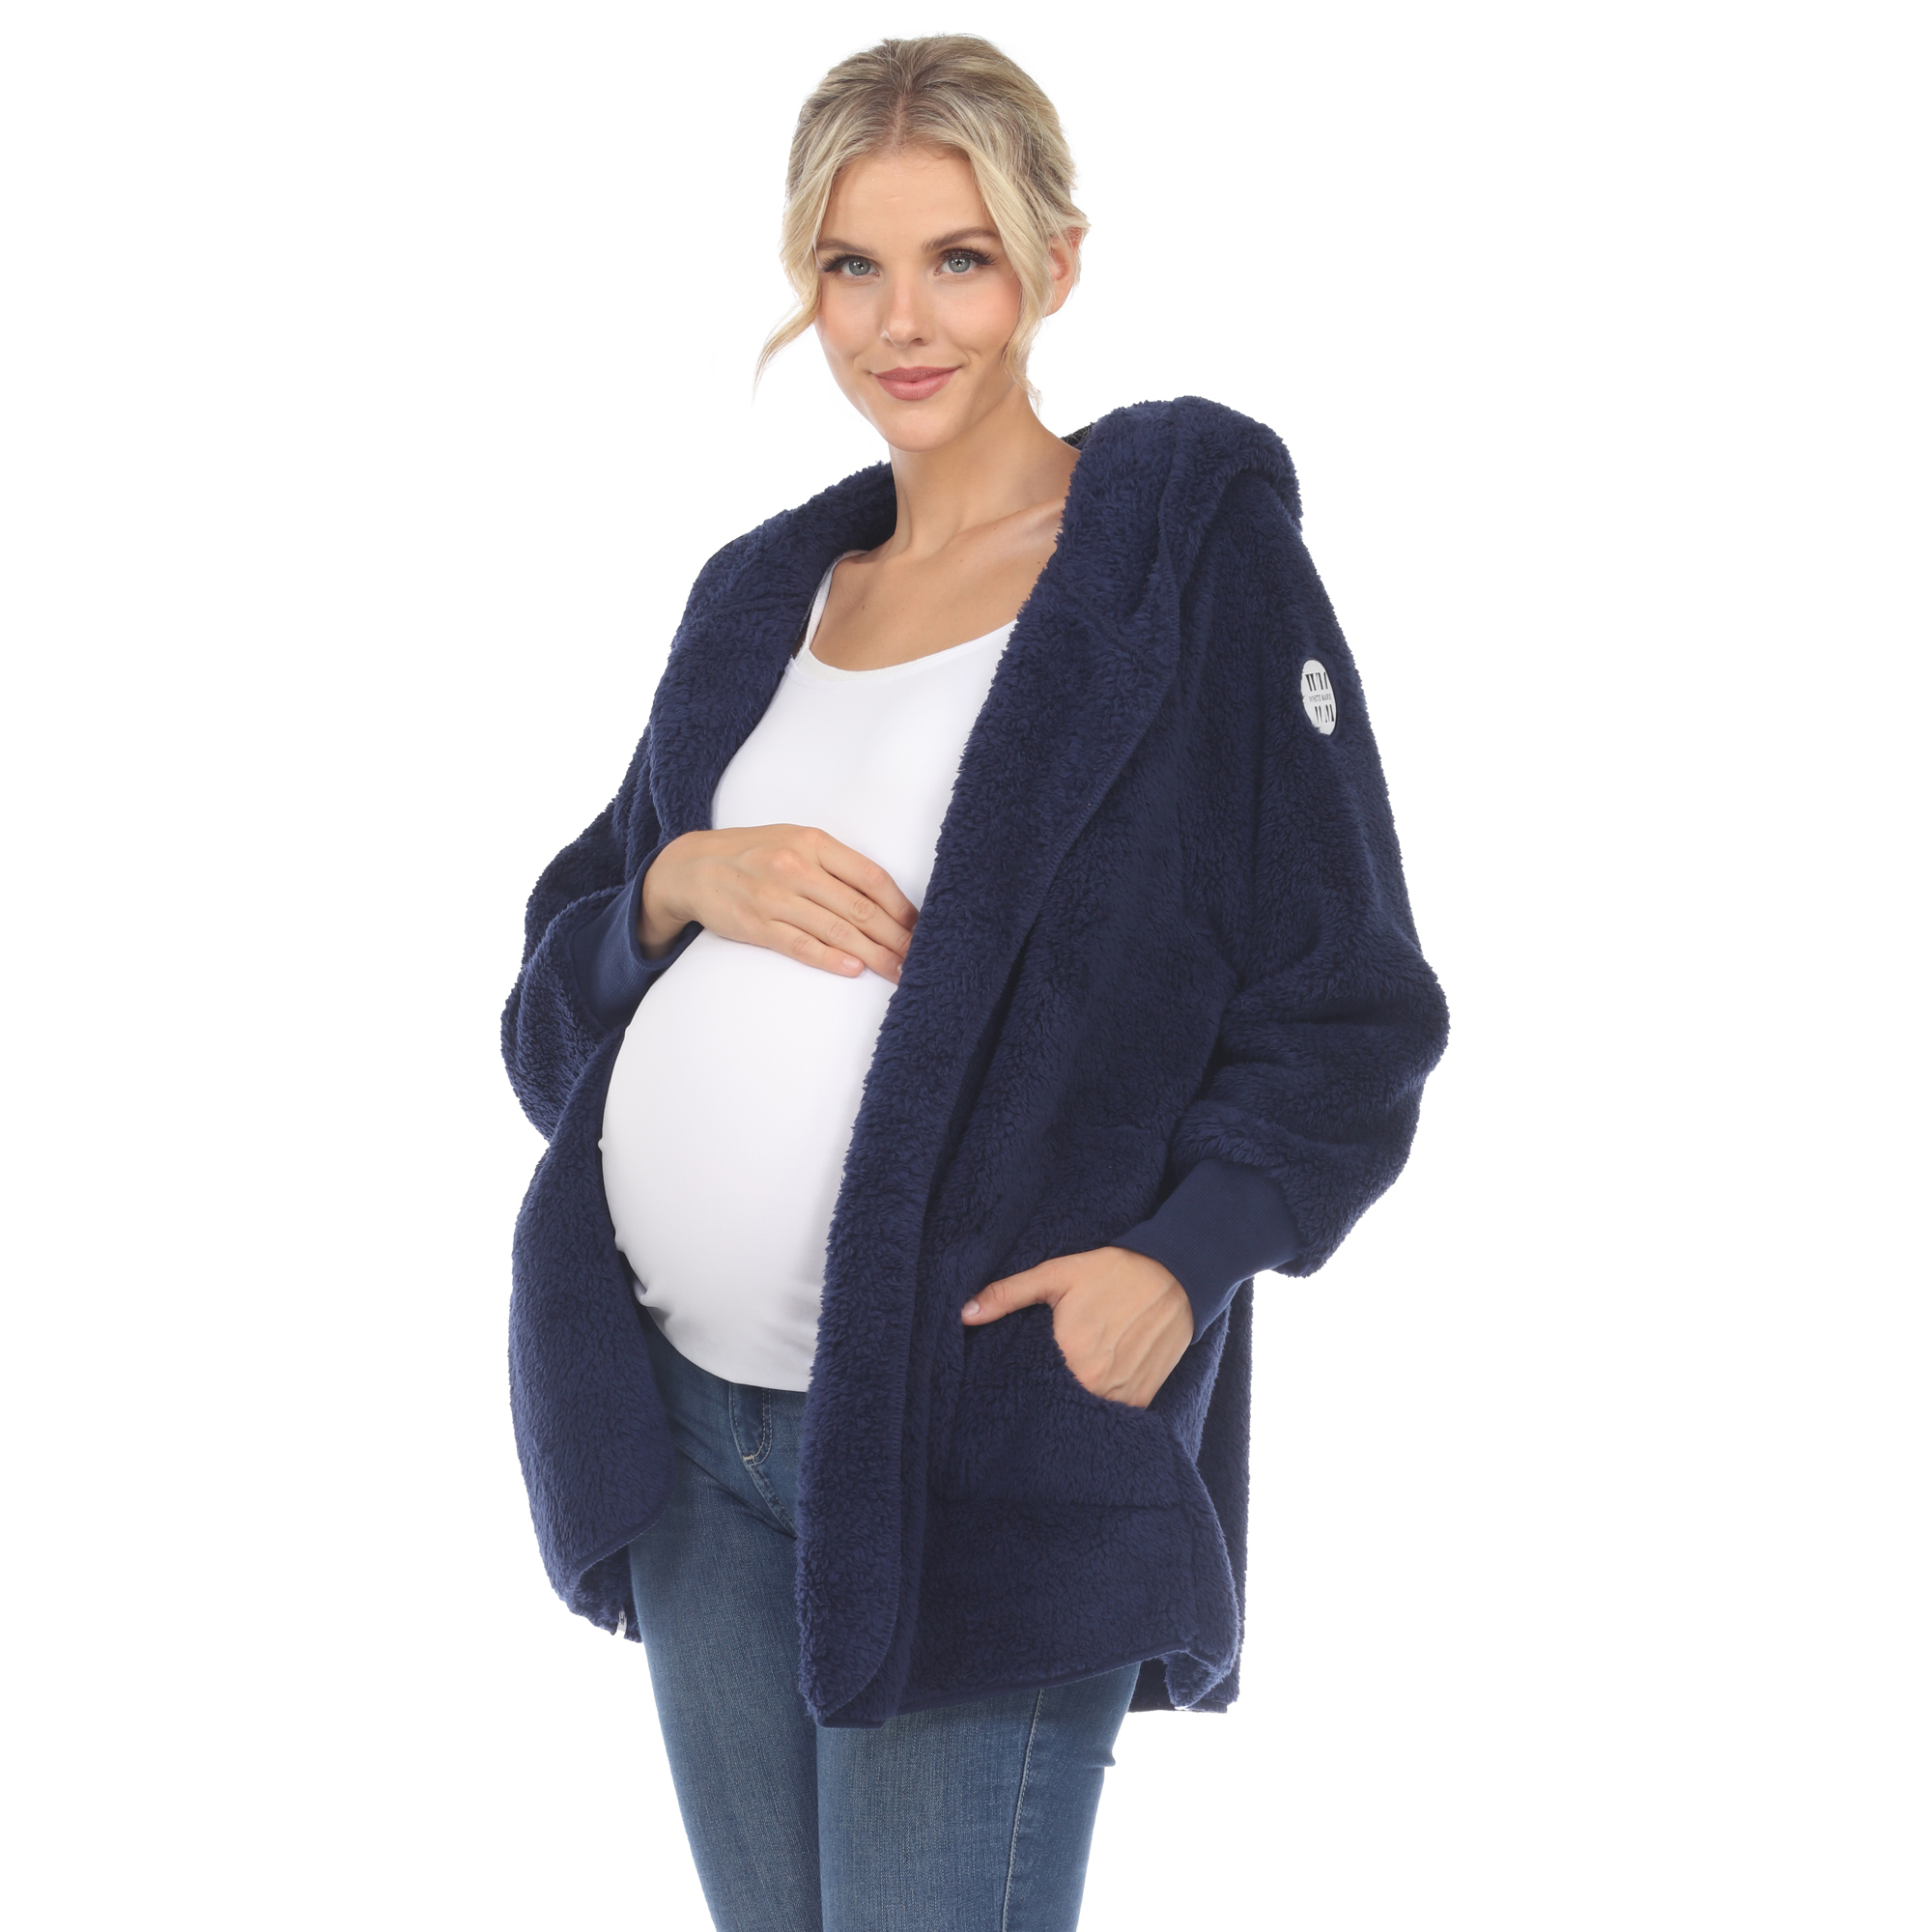 White Mark Womenâs Maternity Plush Hooded Cardigan With Pockets - Navy, L/XL